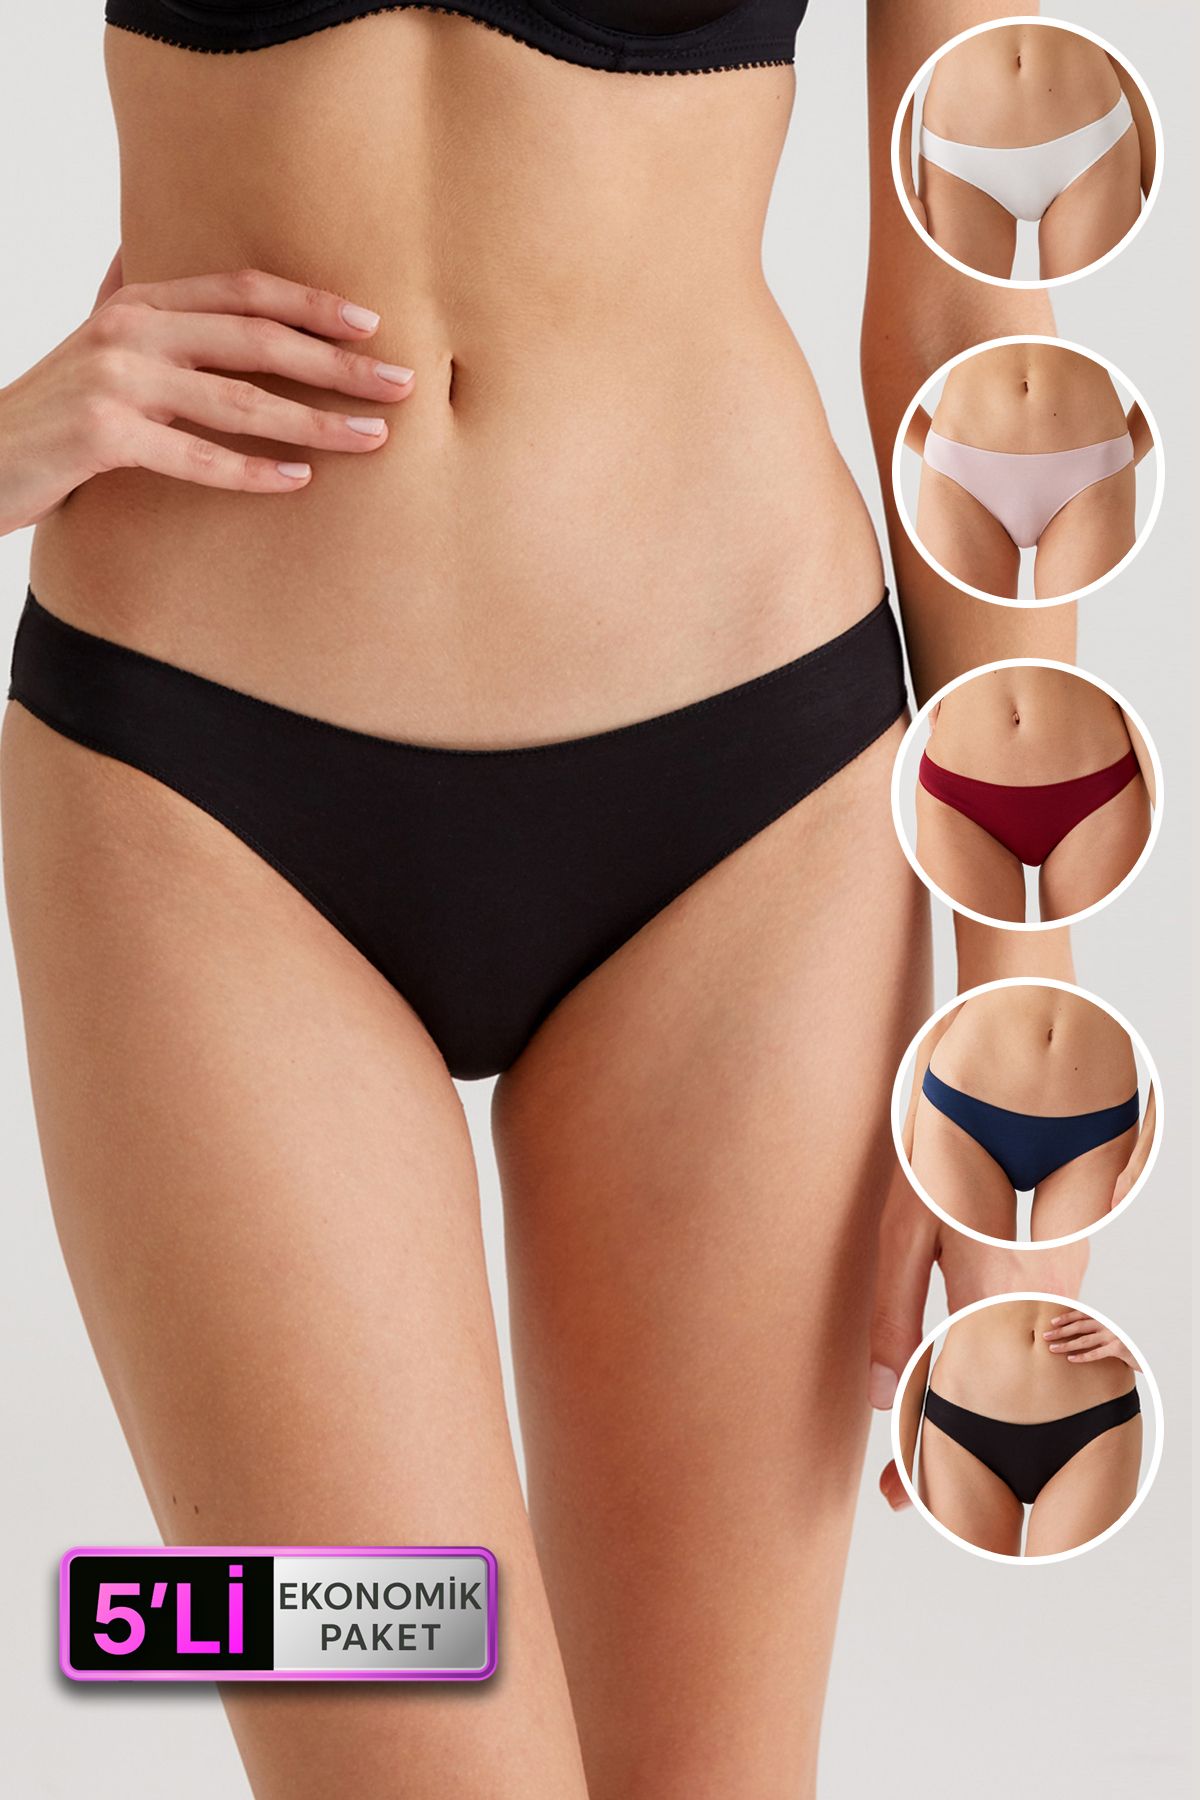 Pierre Cardin Kadın 5'li Ekonomik Paket Siyah-lacivert-bordo-pudra-ekru 2050 No Show Pamuklu Basic Bikini Slip